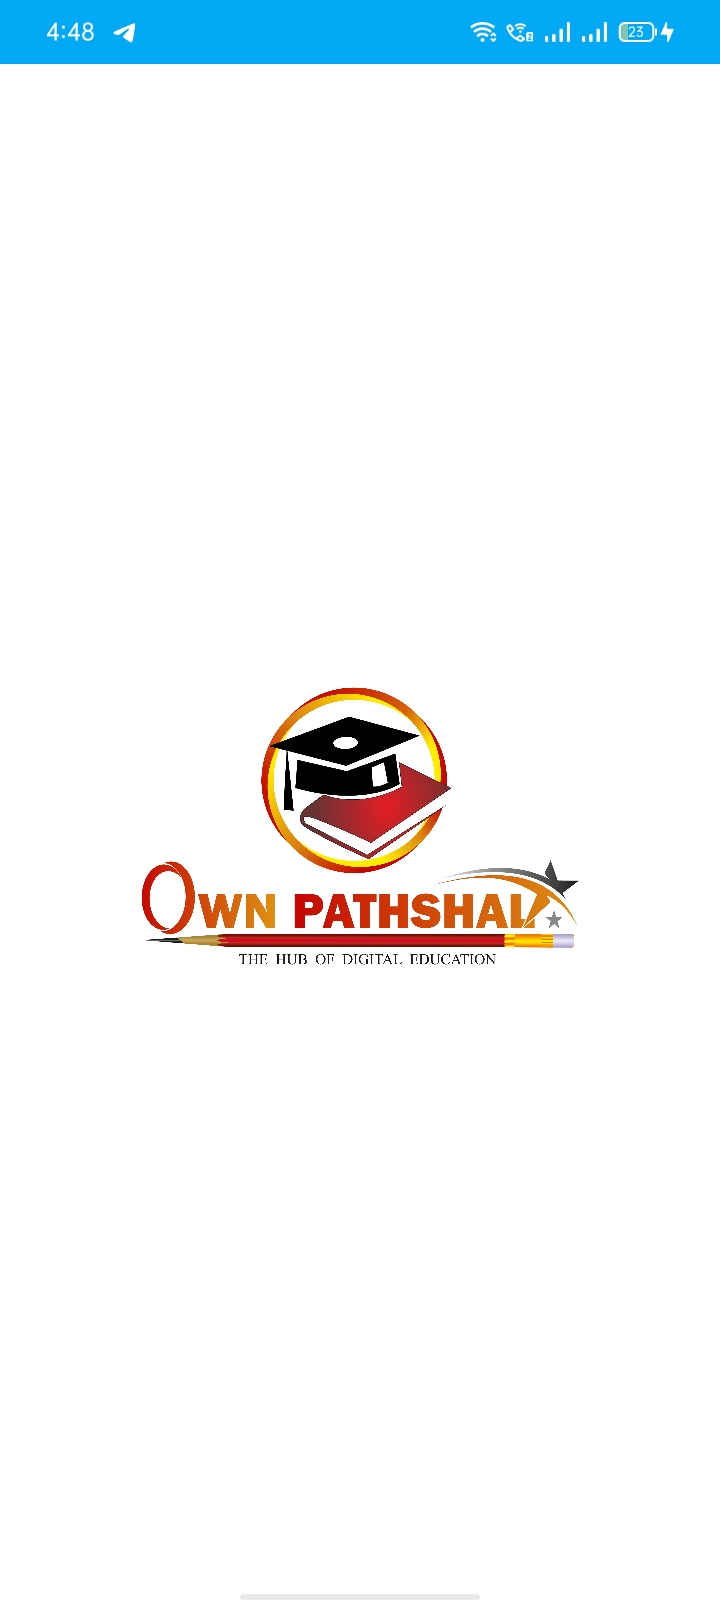 own pathshala